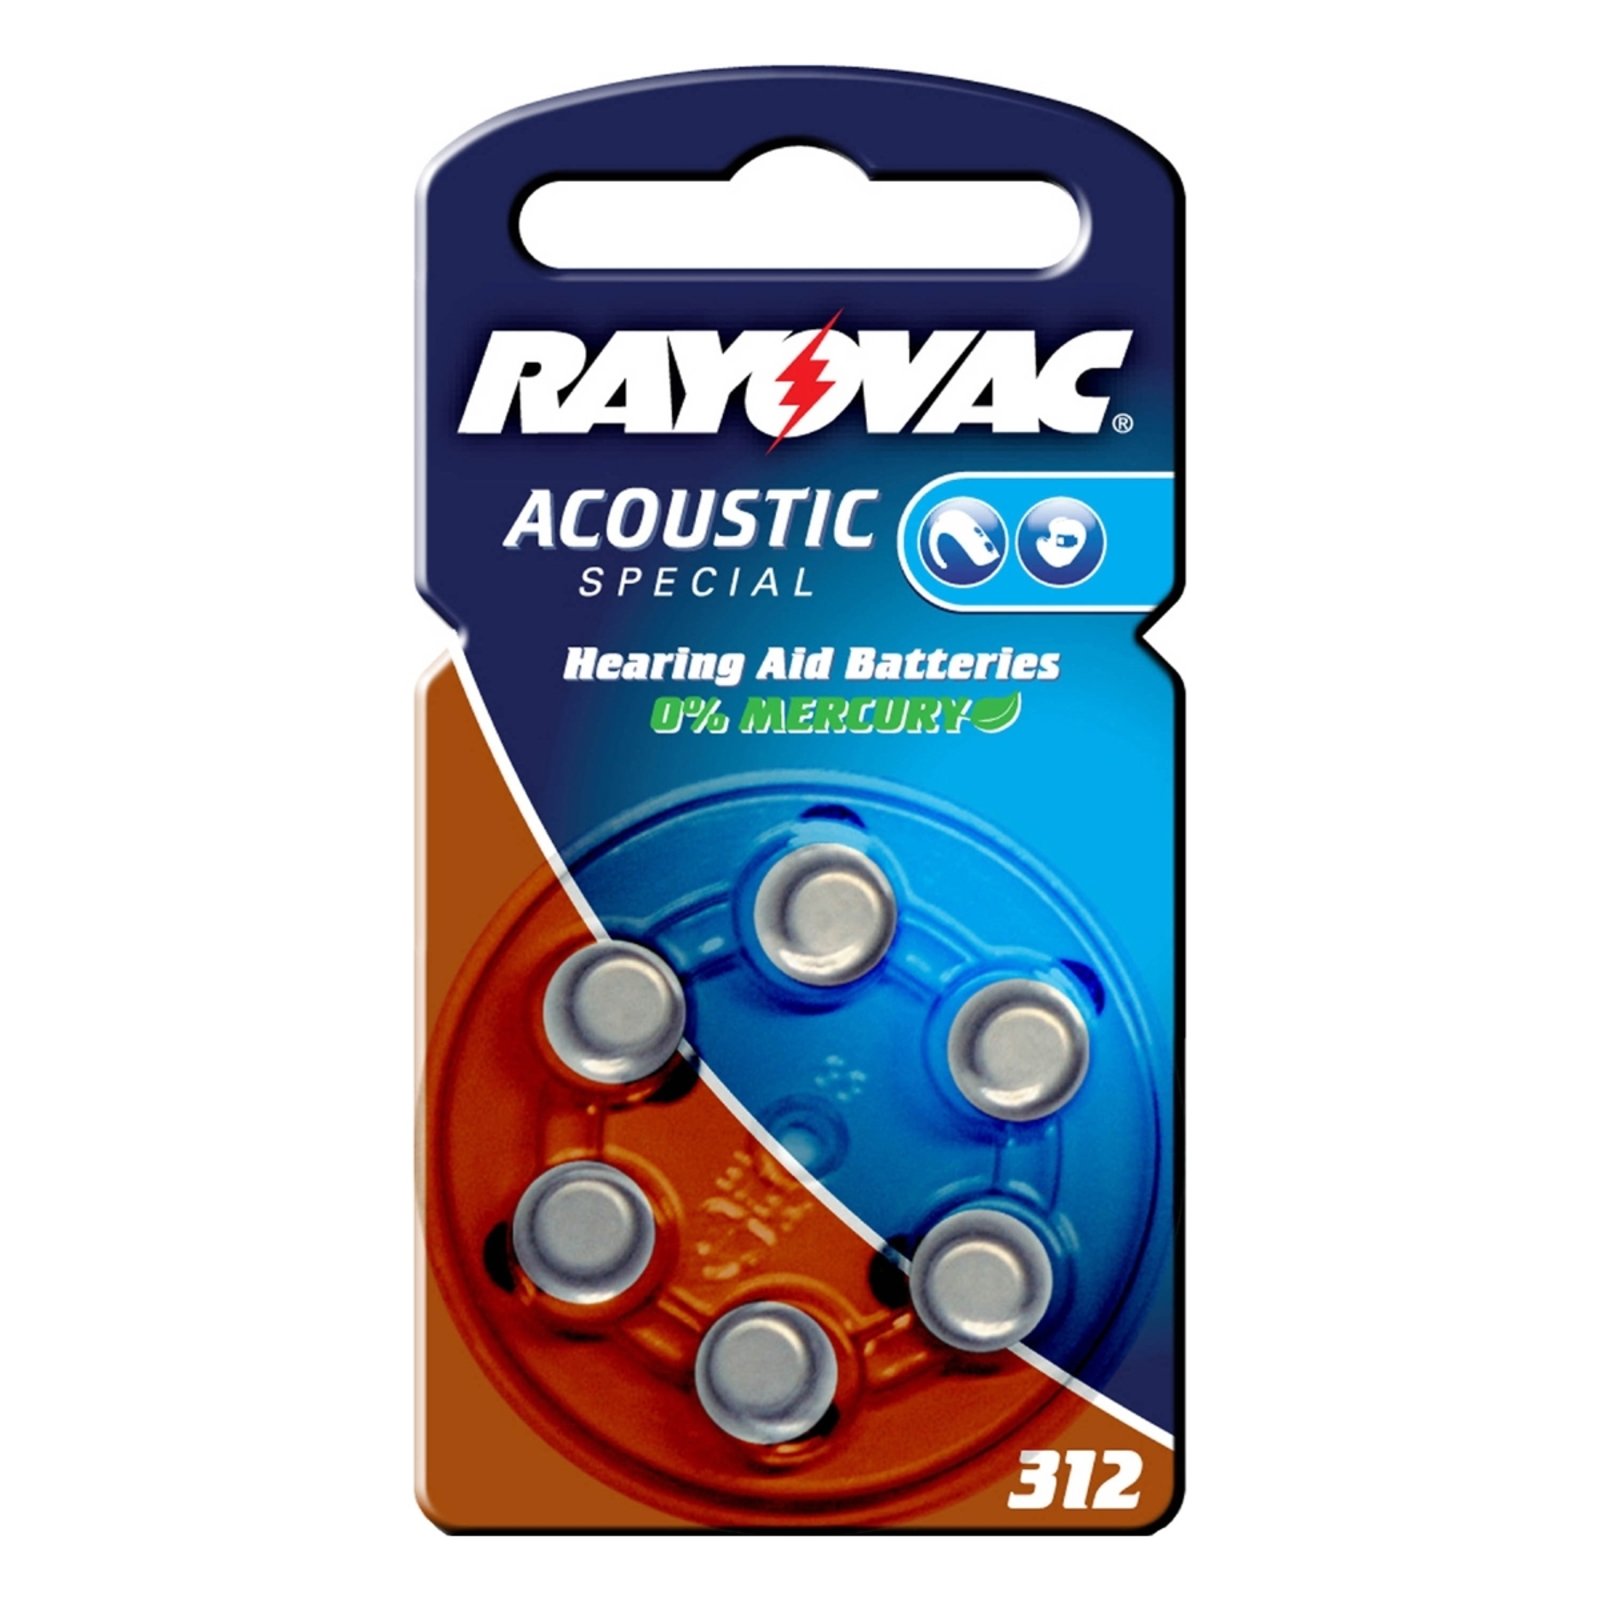 Batteria a bottone Rayovac 312 Acoustic 180m/Ah